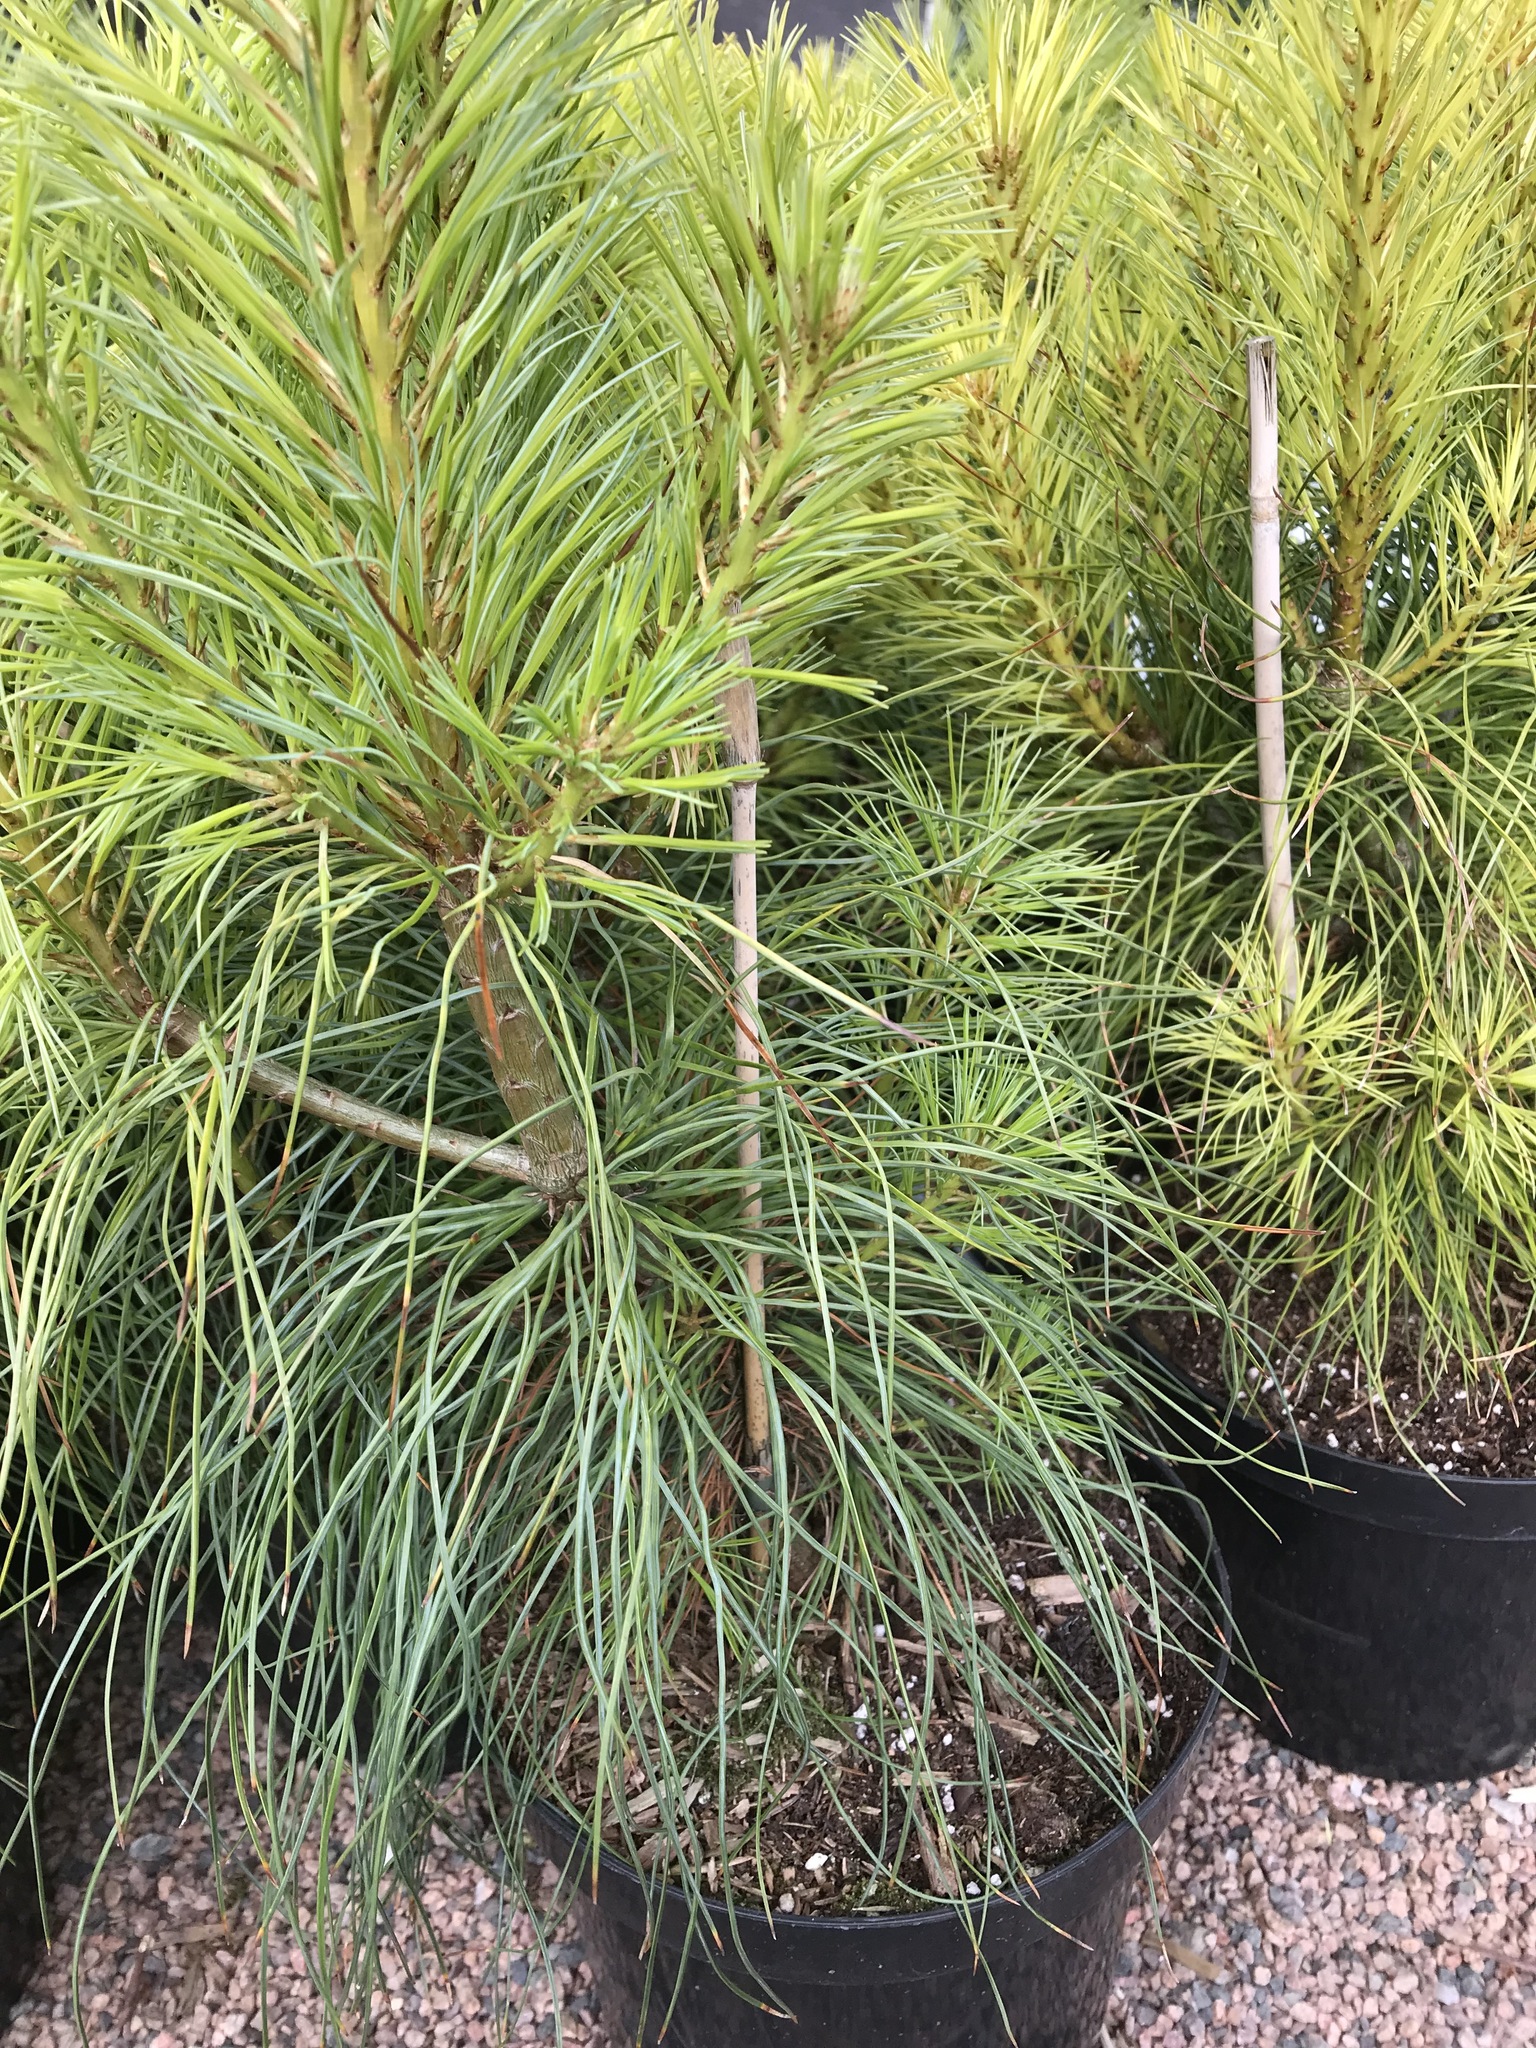 Weymouthtall - Pinus strobus